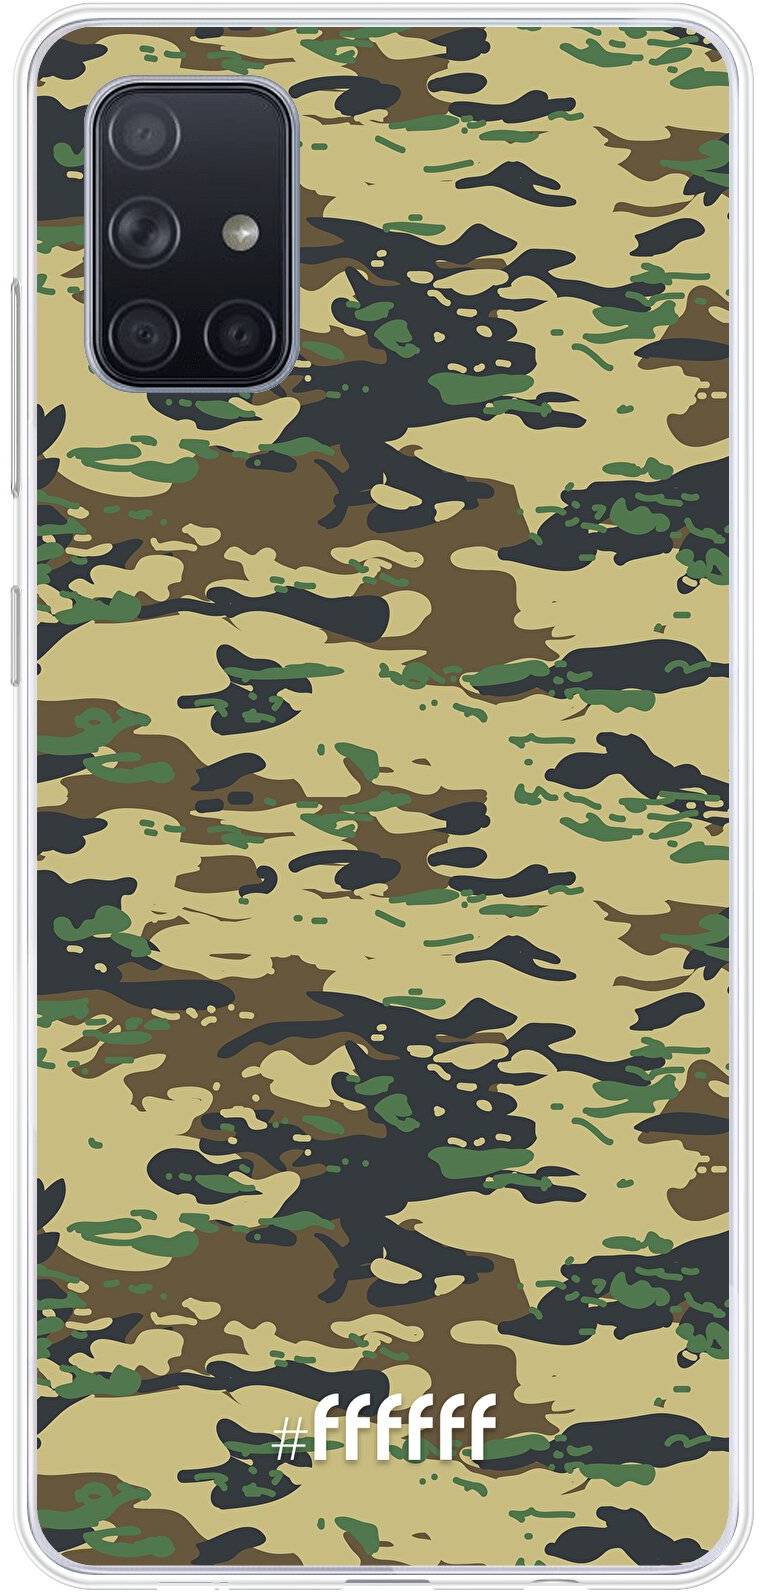 Desert Camouflage Galaxy A71